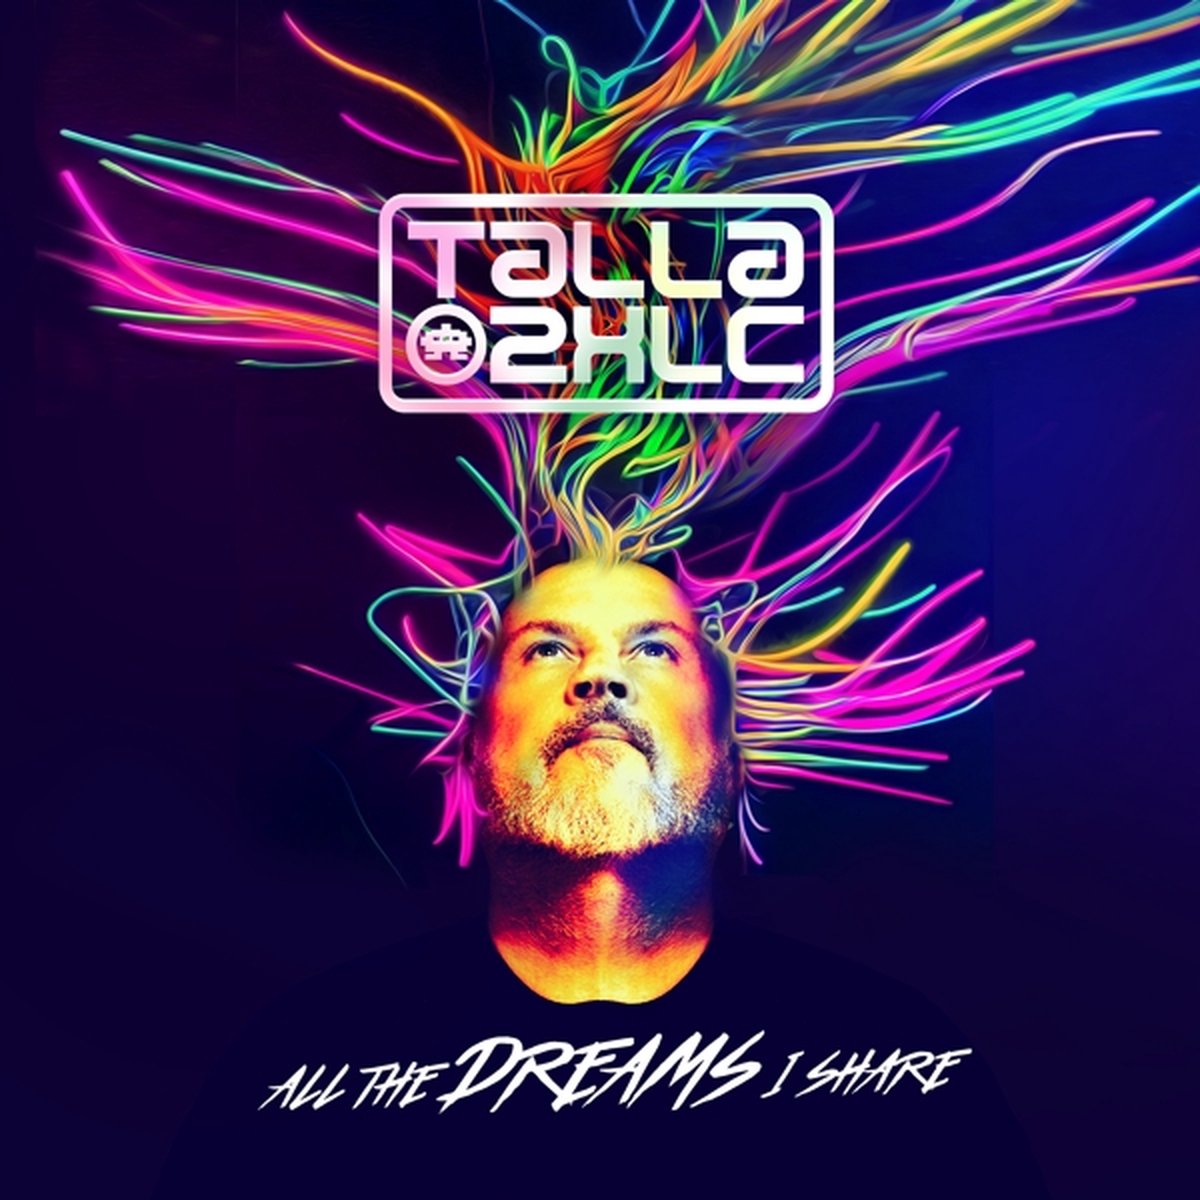 Talla 2xlc - All The Dreams I Share (CD) - Talla 2Xlc